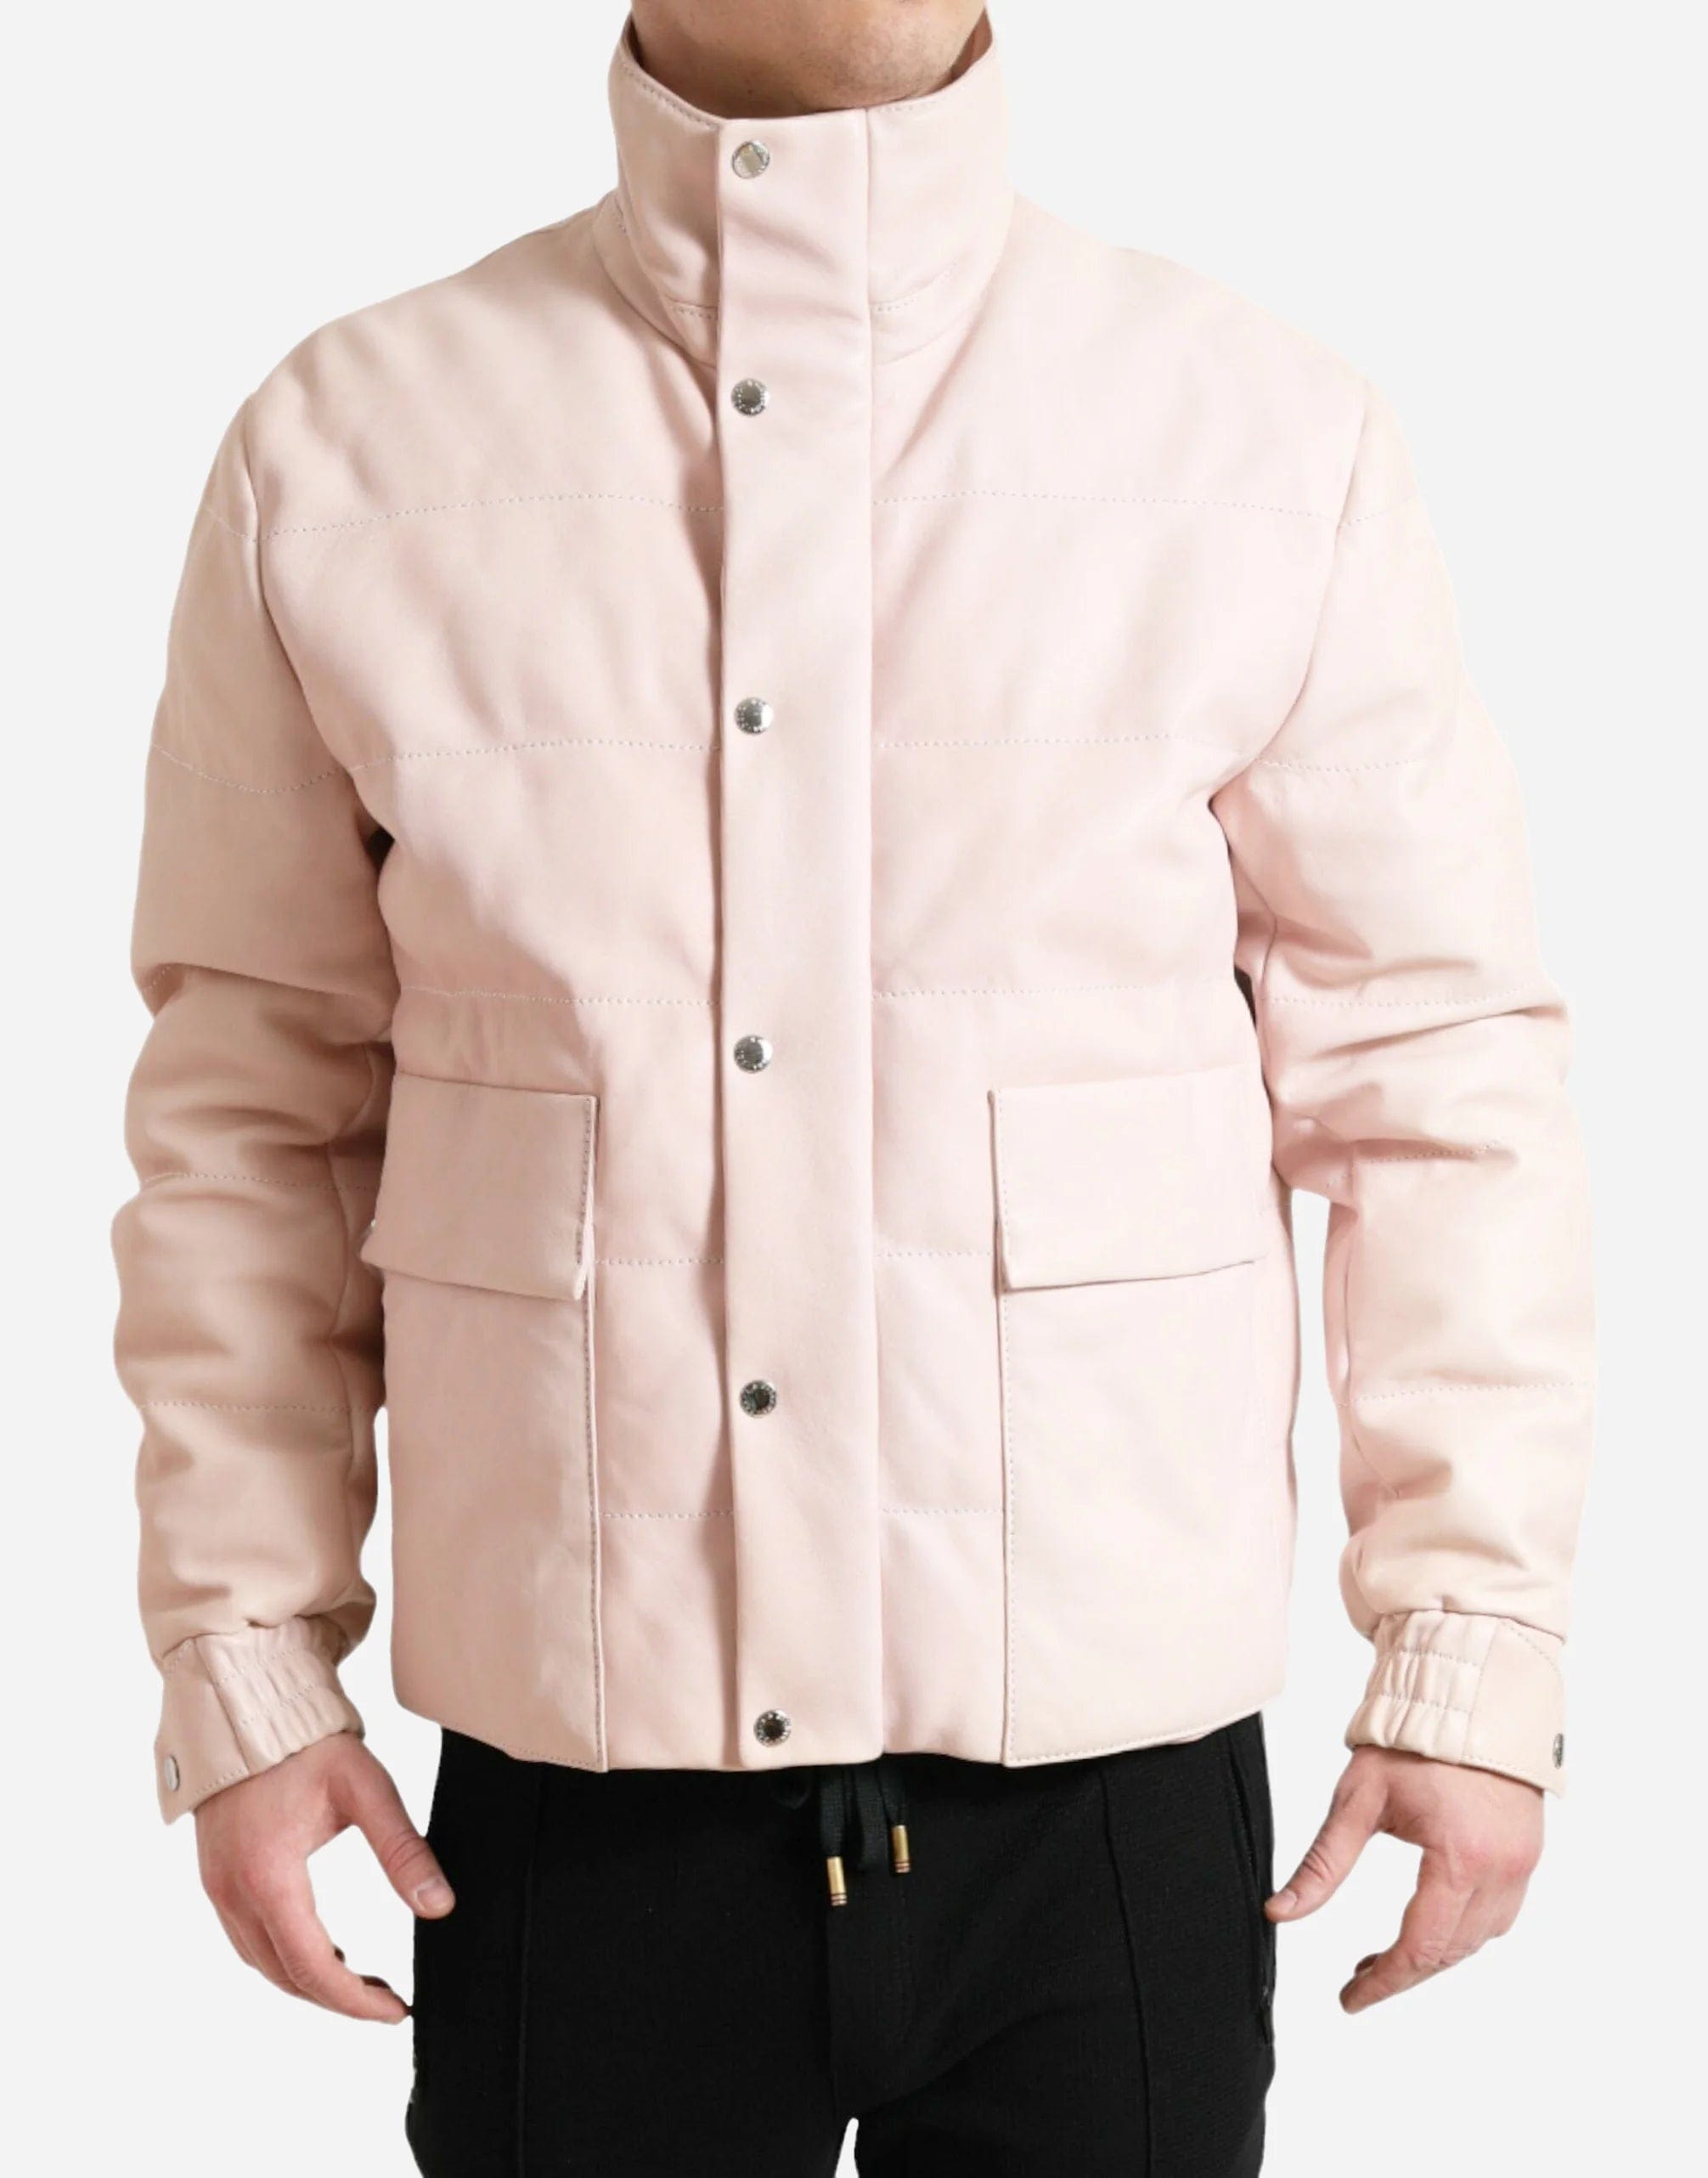 Boohoo man x Dababy Green/pink Jacket. Men's Medium/women's Large | eBay